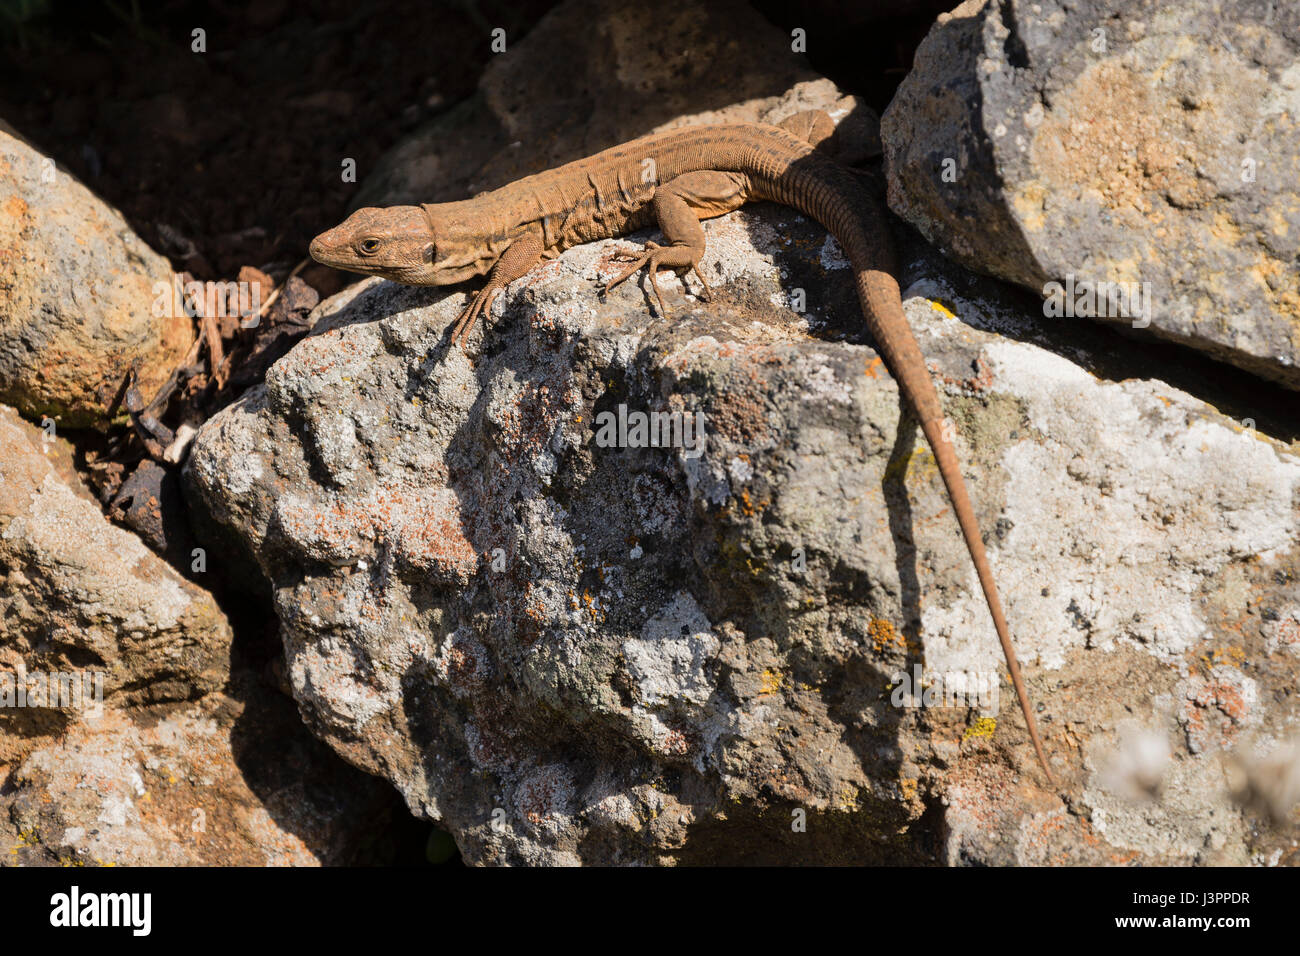 Maschio di Gallot lizard, Las Tricias, Puntagorda, La Palma, Spagna, Gallotia galloti palmae, Foto Stock